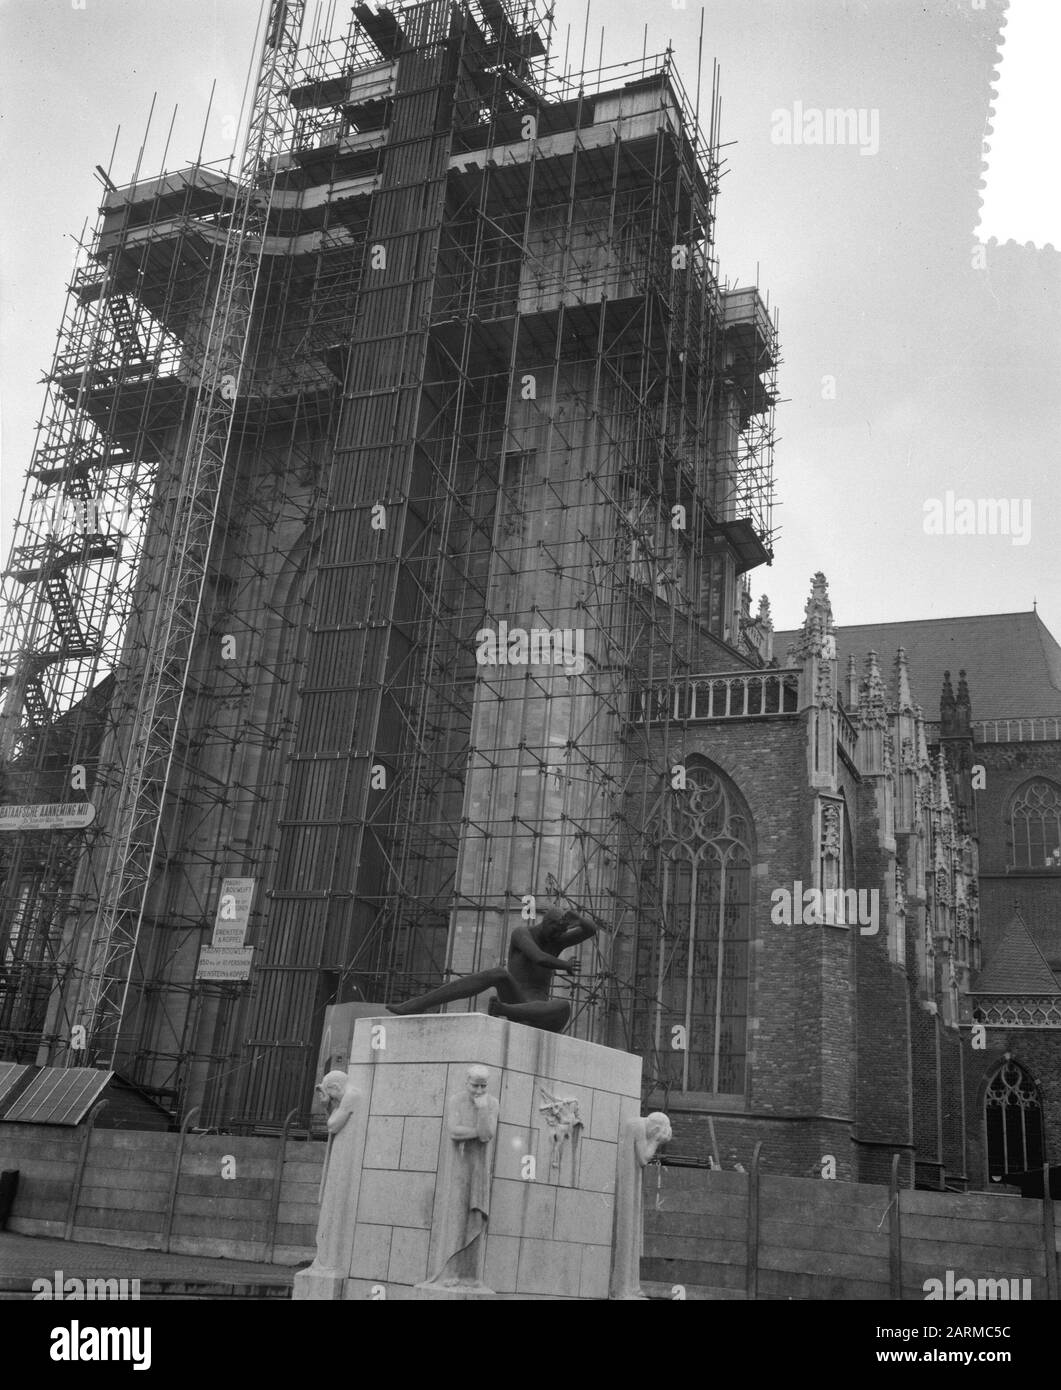 Rebuild tower St. Eusebiuskerk Arnhem Data: 30 Novembre 1959 luogo: Arnhem Parole Chiave: Chiese, restauri, torri Nome personale: Eusebio chiesa Foto Stock